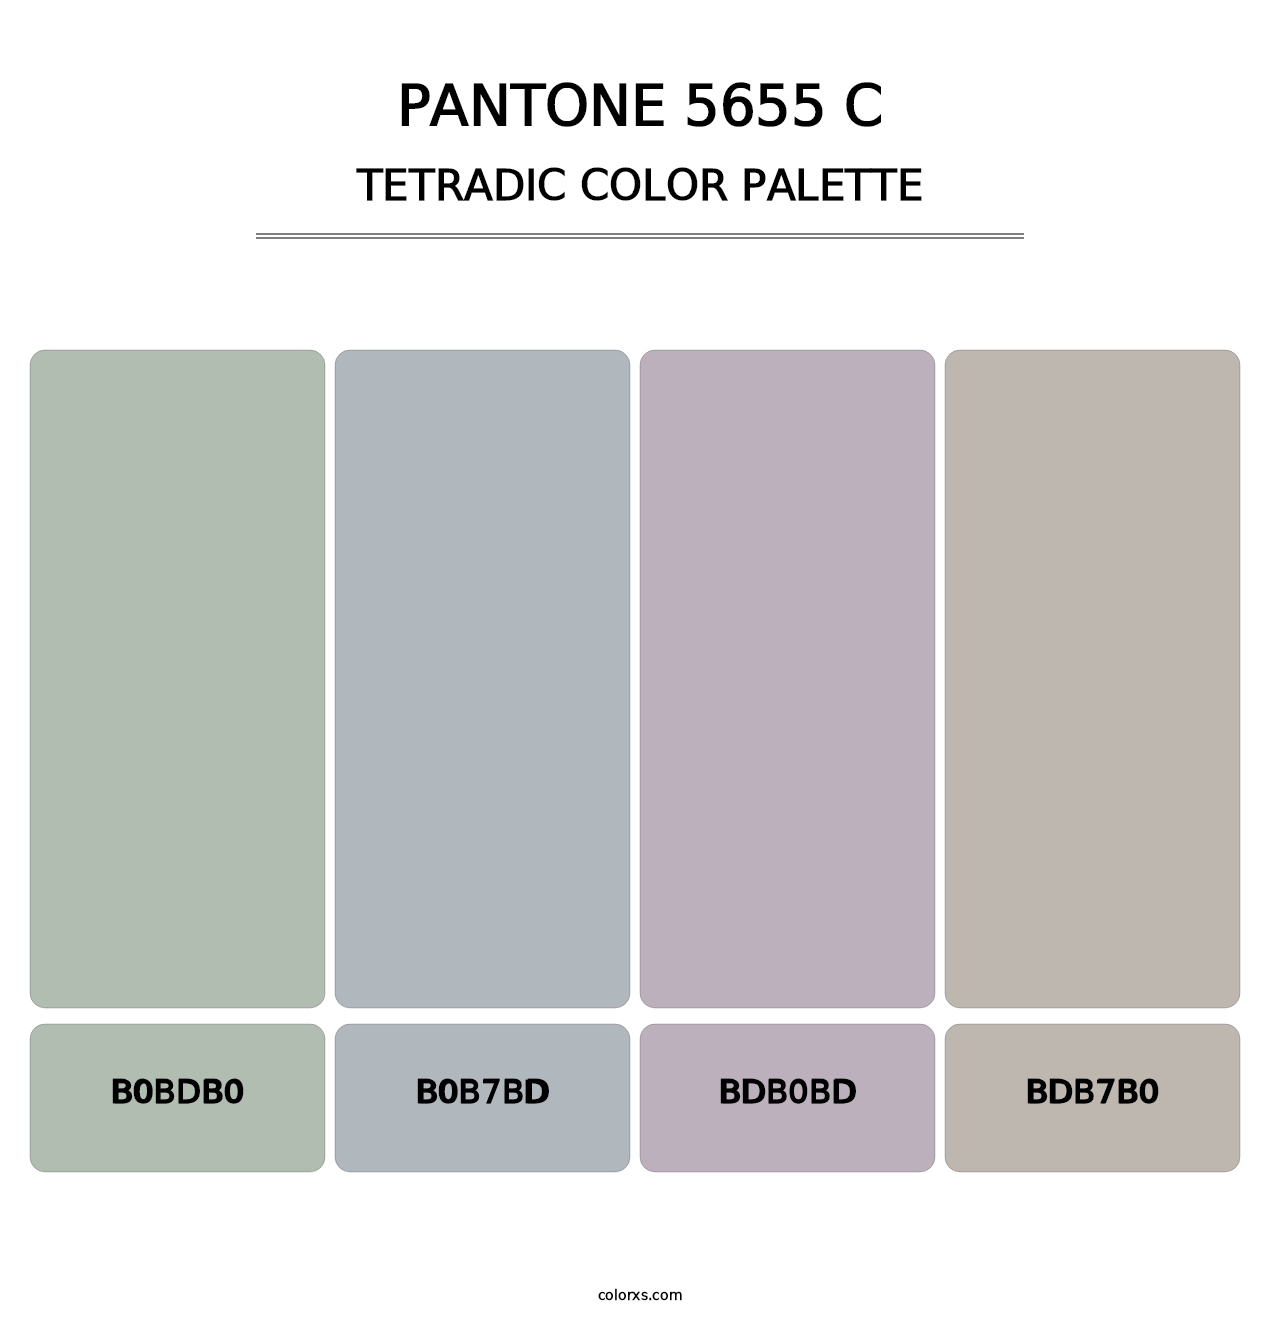 PANTONE 5655 C - Tetradic Color Palette